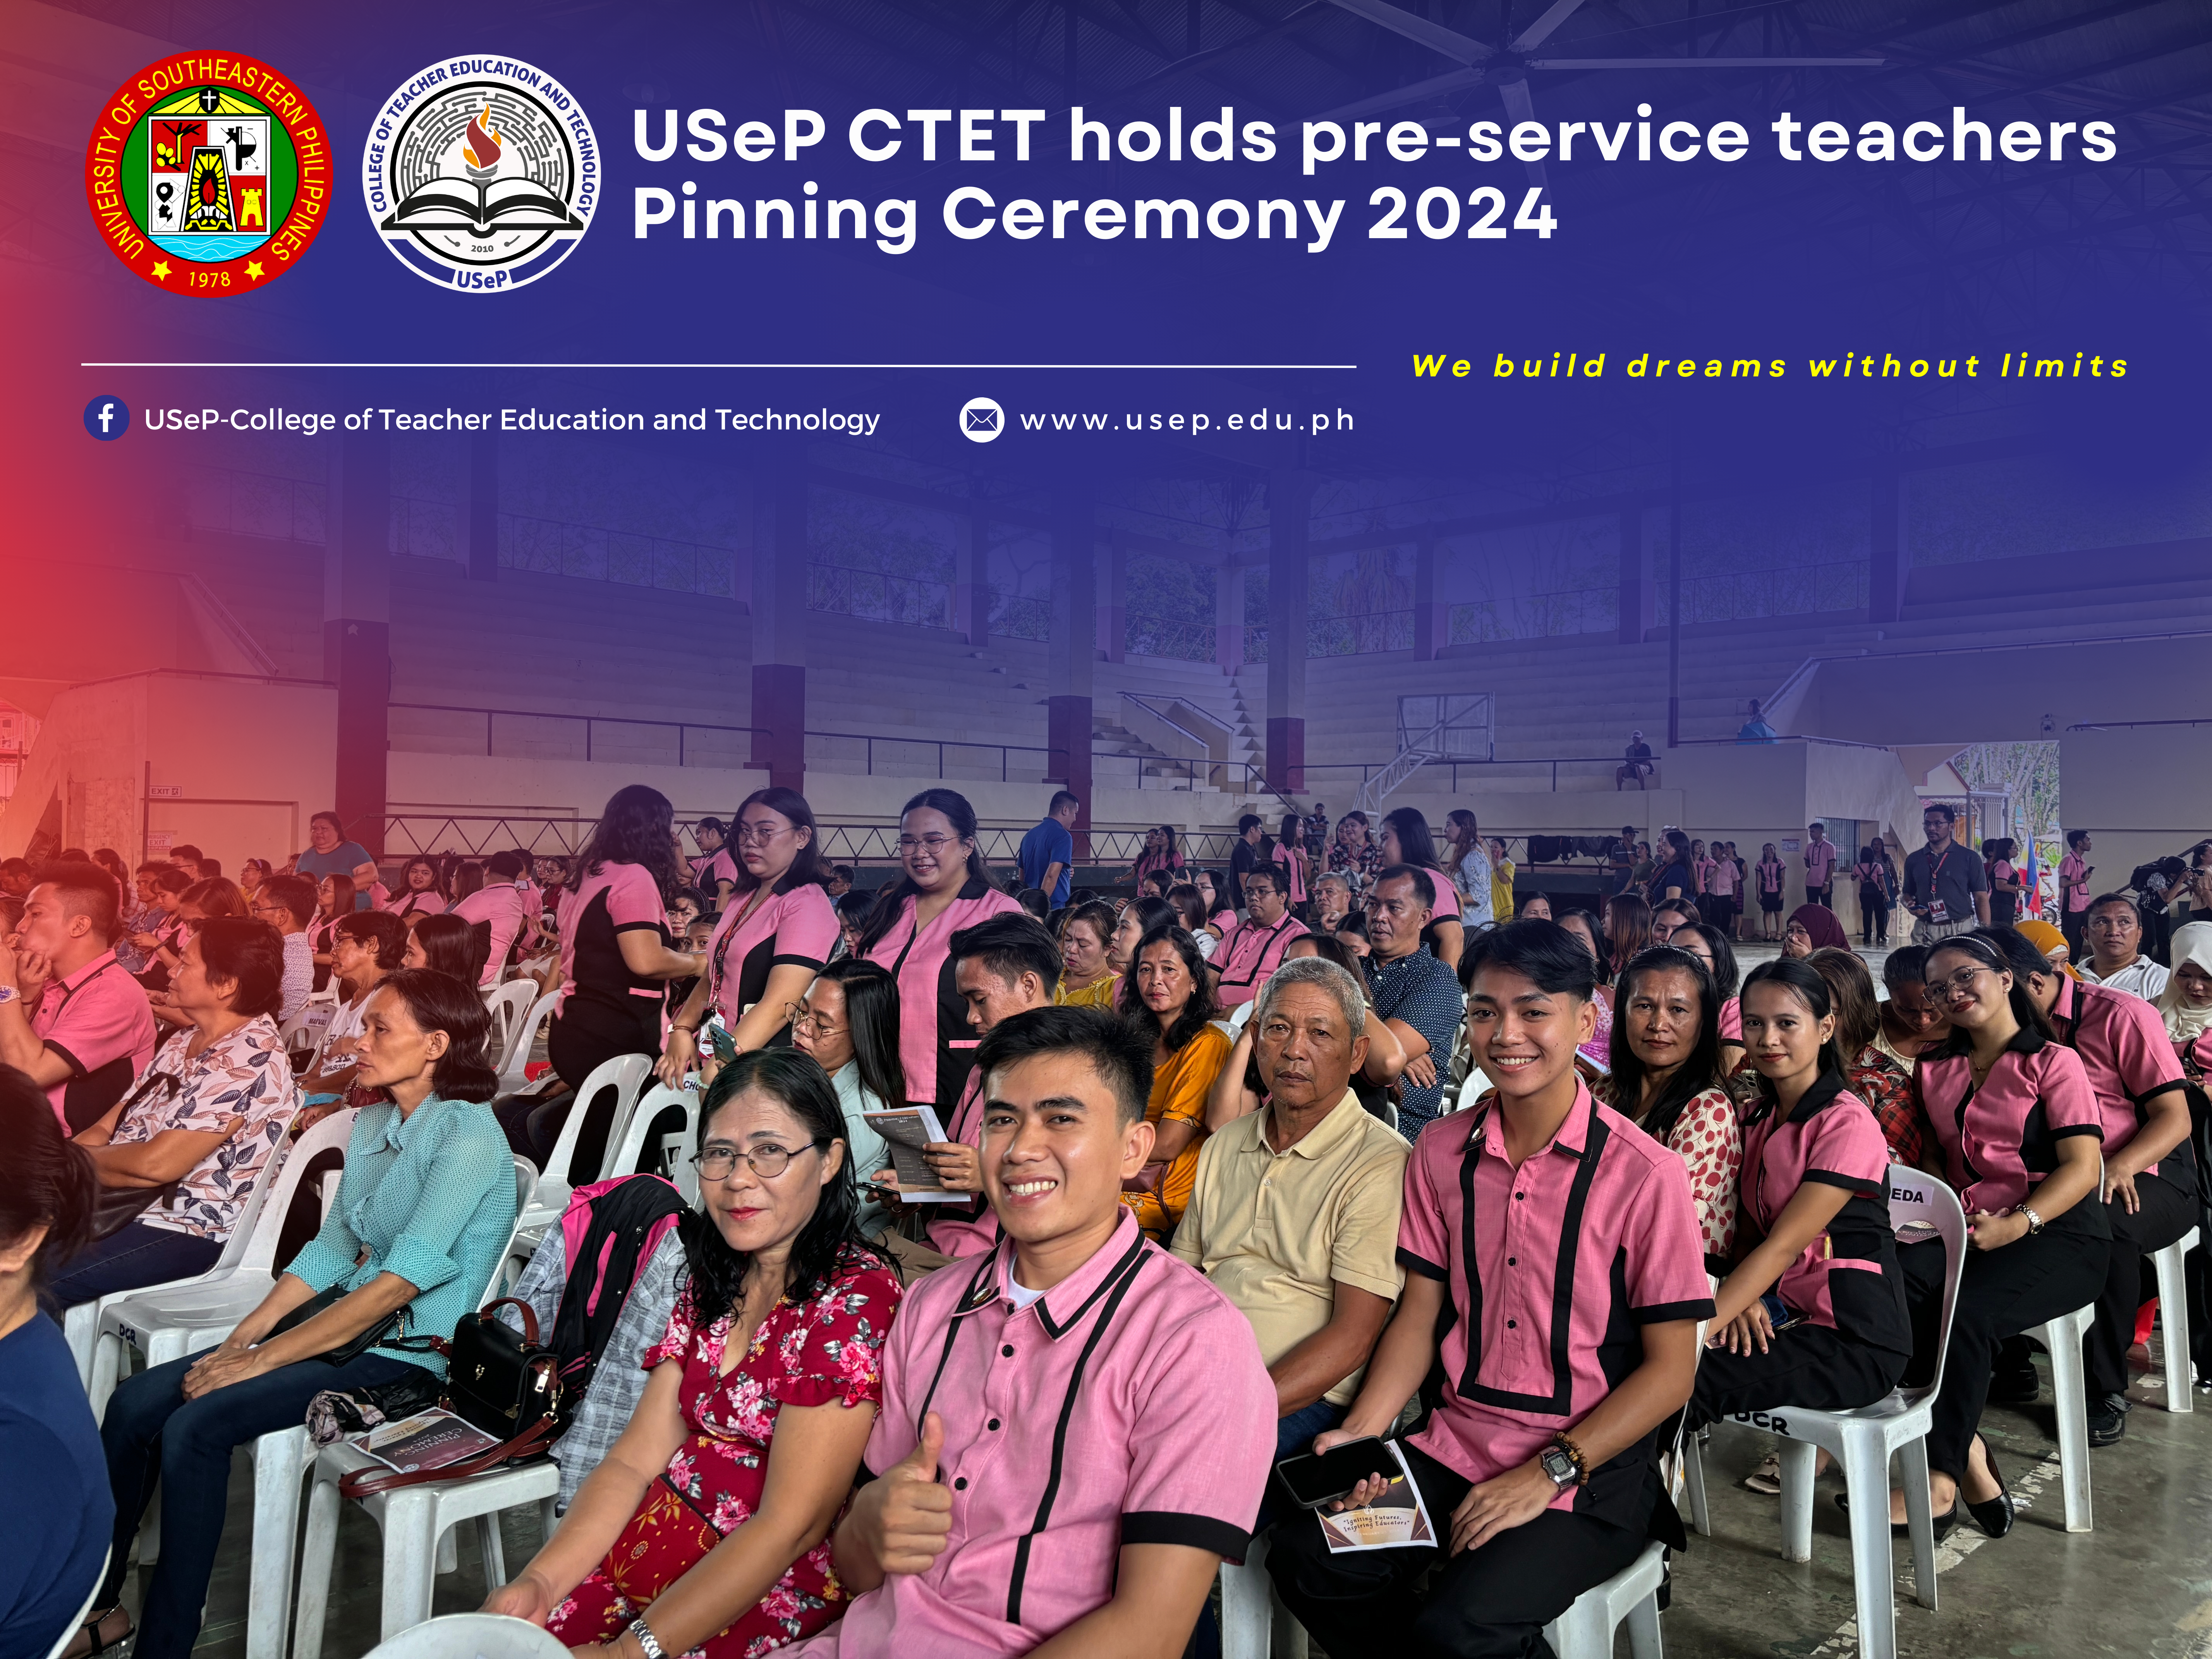 USeP CTET holds pre-service teachers’ Pinning Ceremony 2024